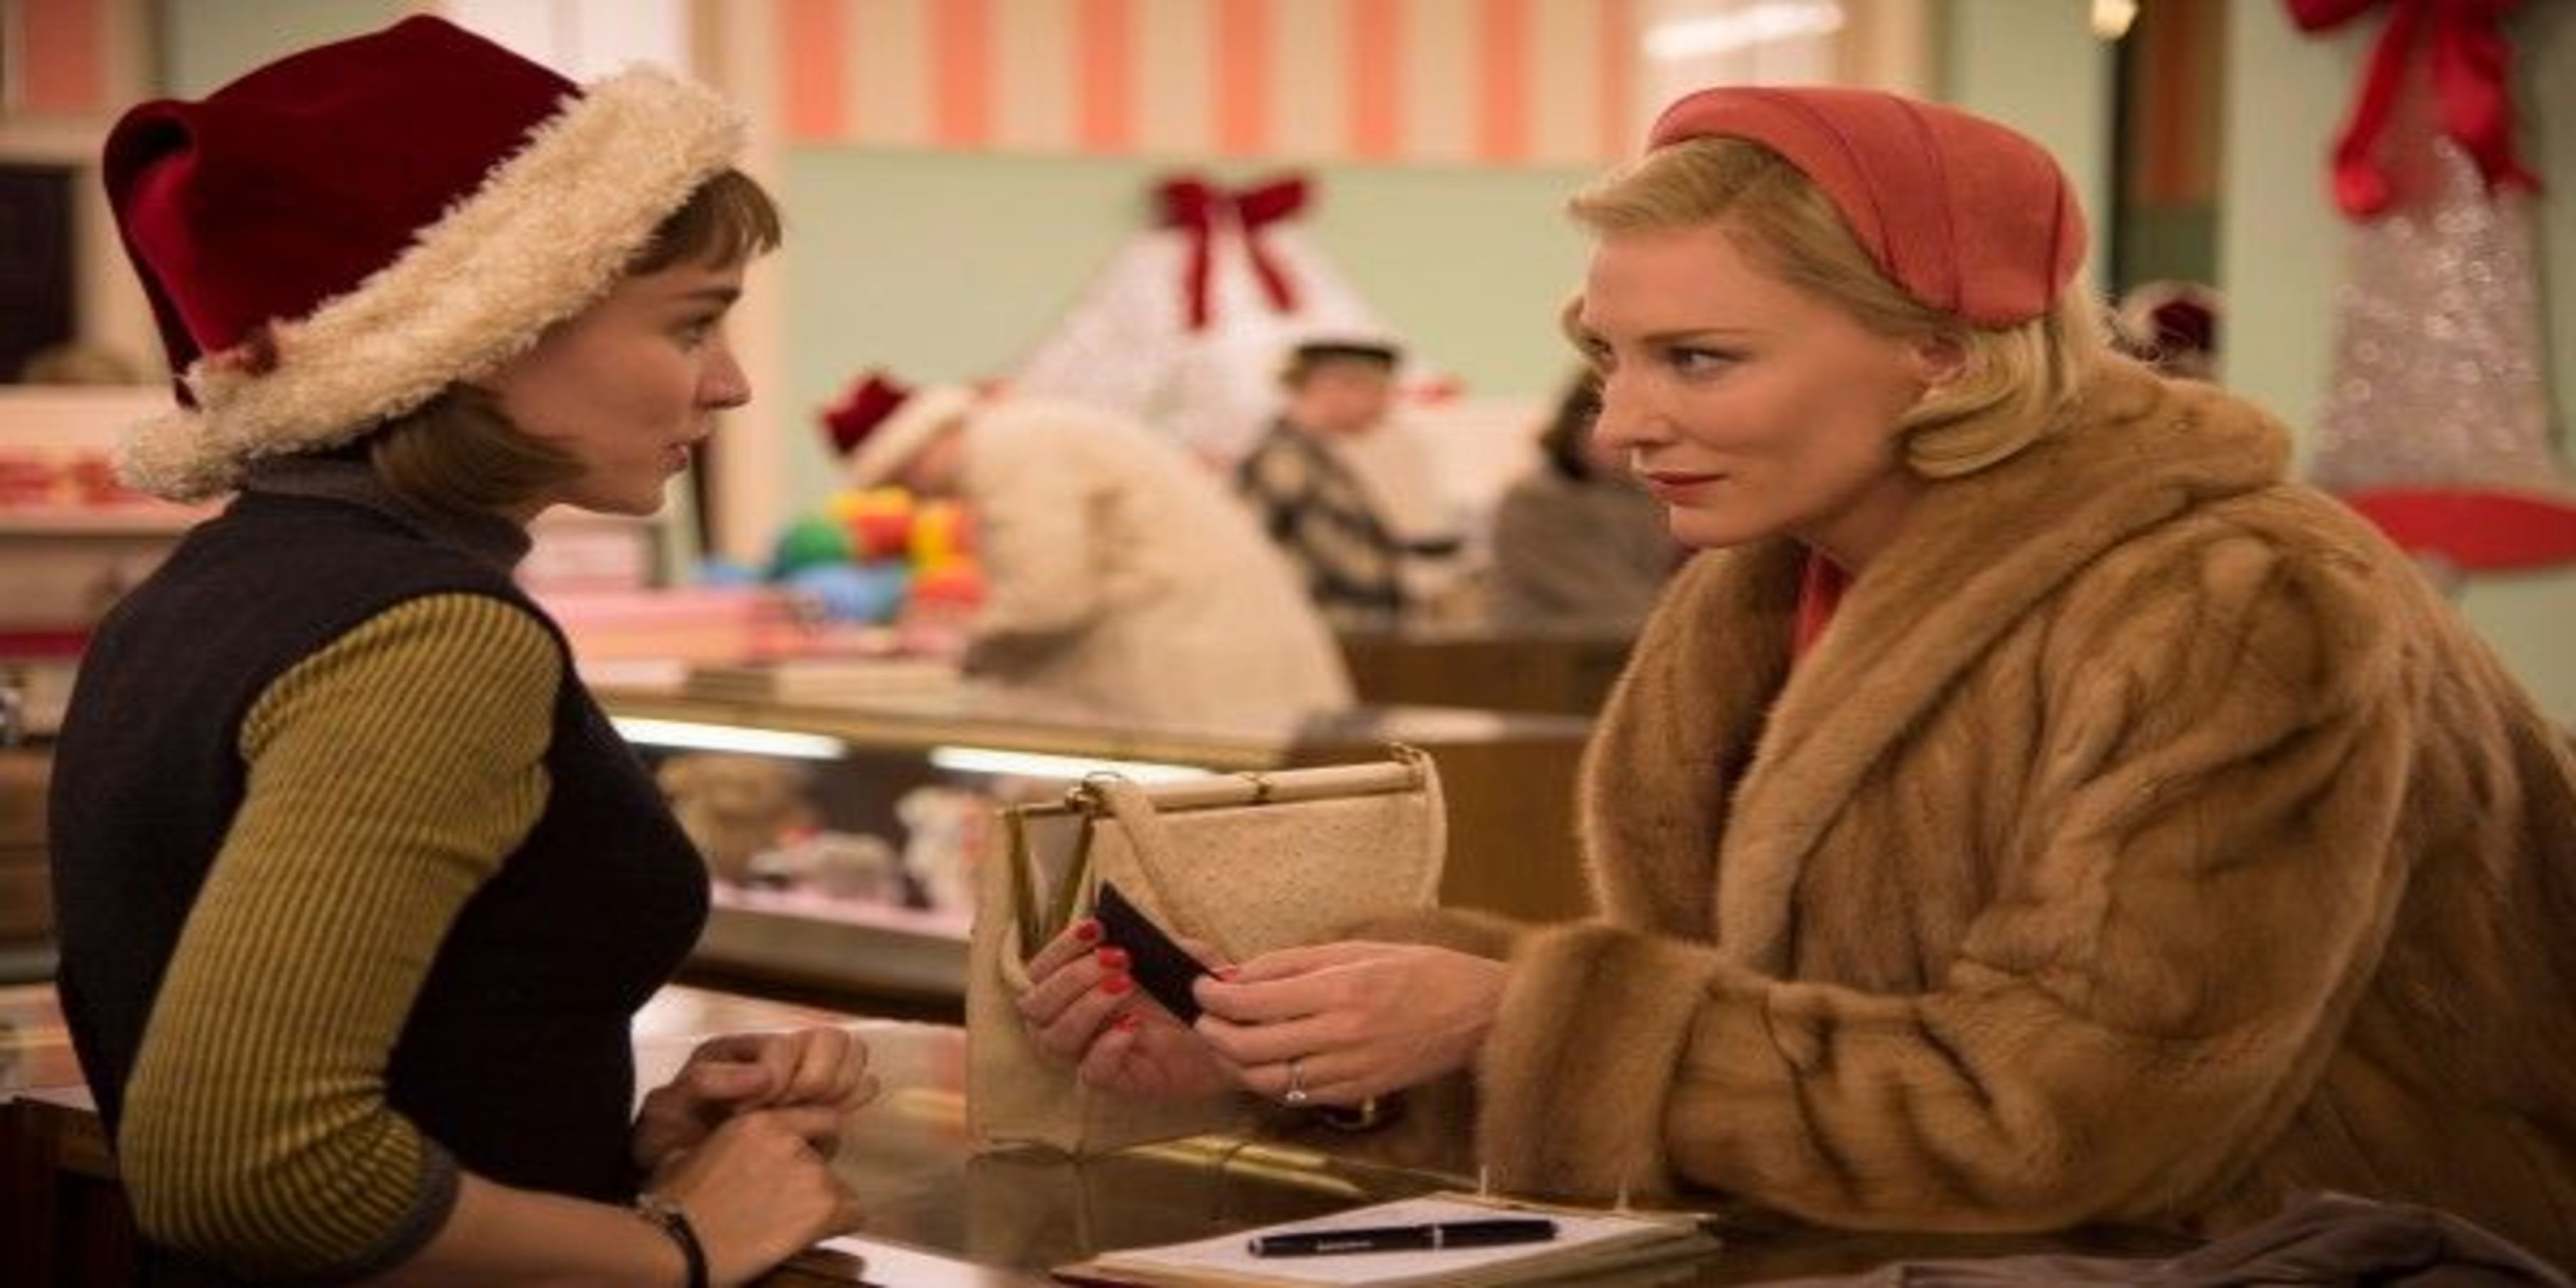 Carol Aird de Cate Blanchet et Therese Belivet de Rooney Mara dans Carol.